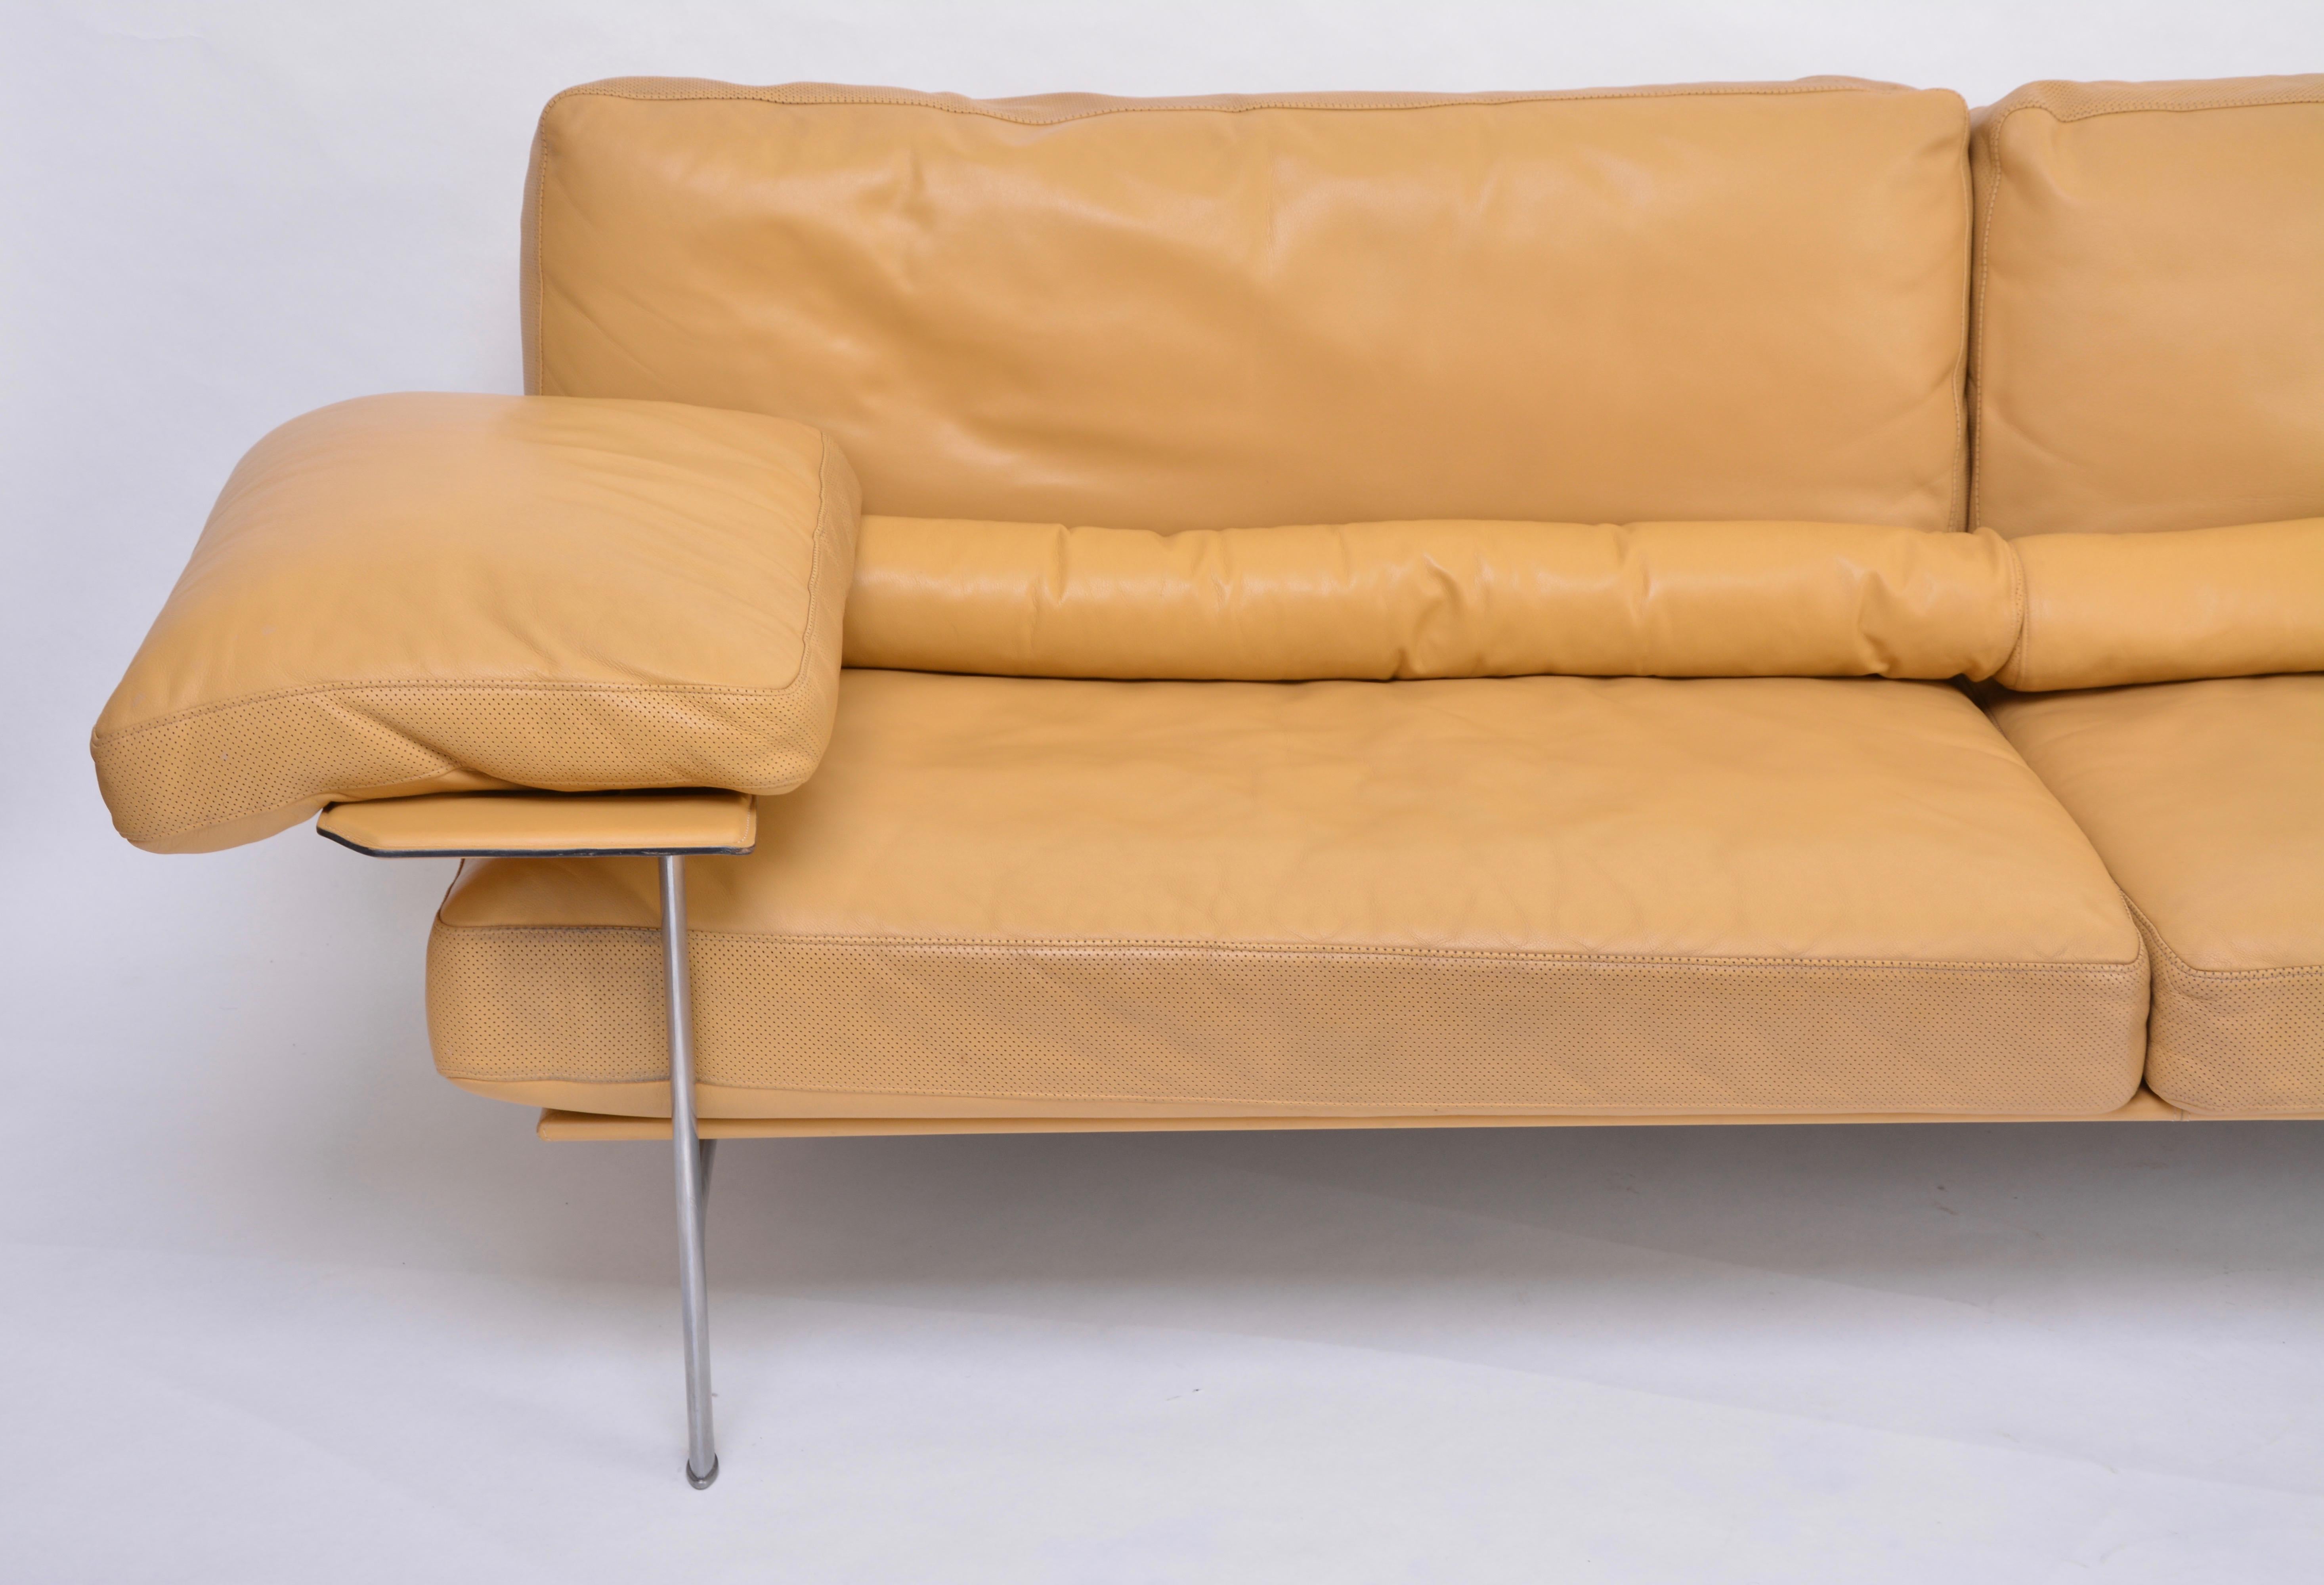 20th Century Rare Diesis Sofa in Ochre Colored Leather by Citterio & Nava for B&B Italia